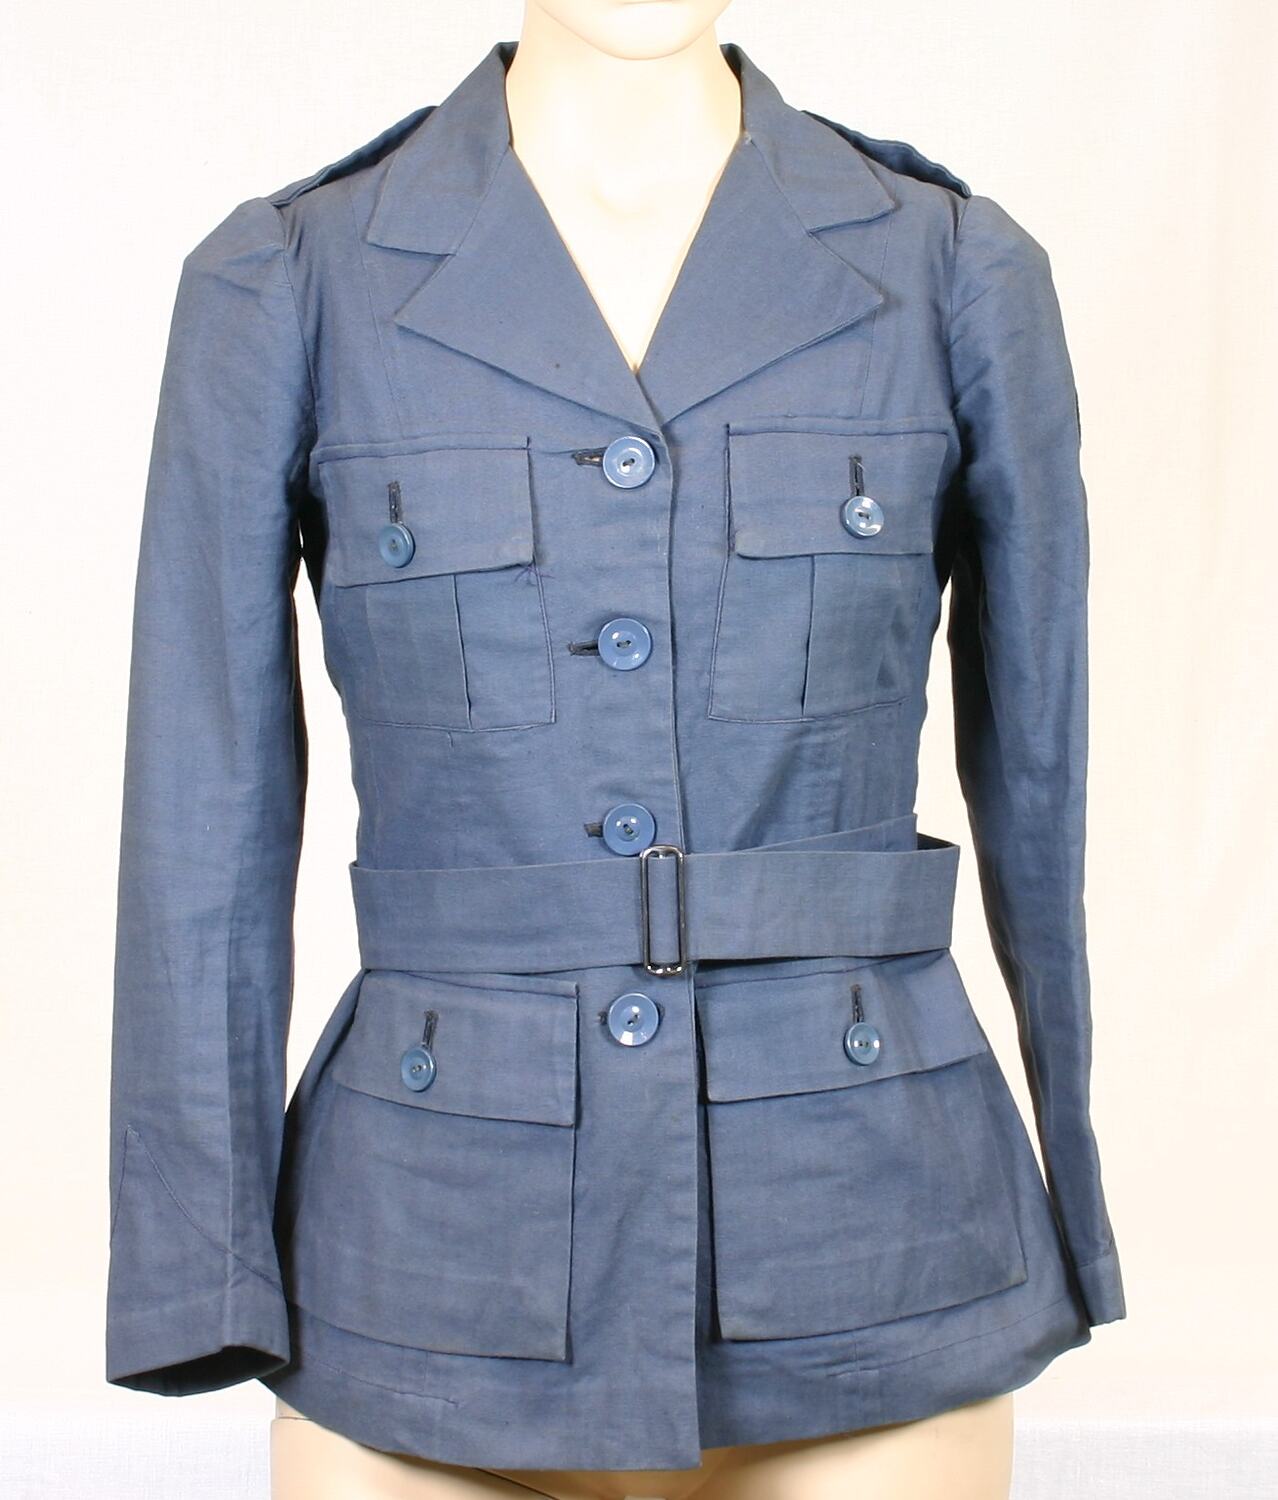 Uniform - Women's Australian National Service, World War II, 1939-1945